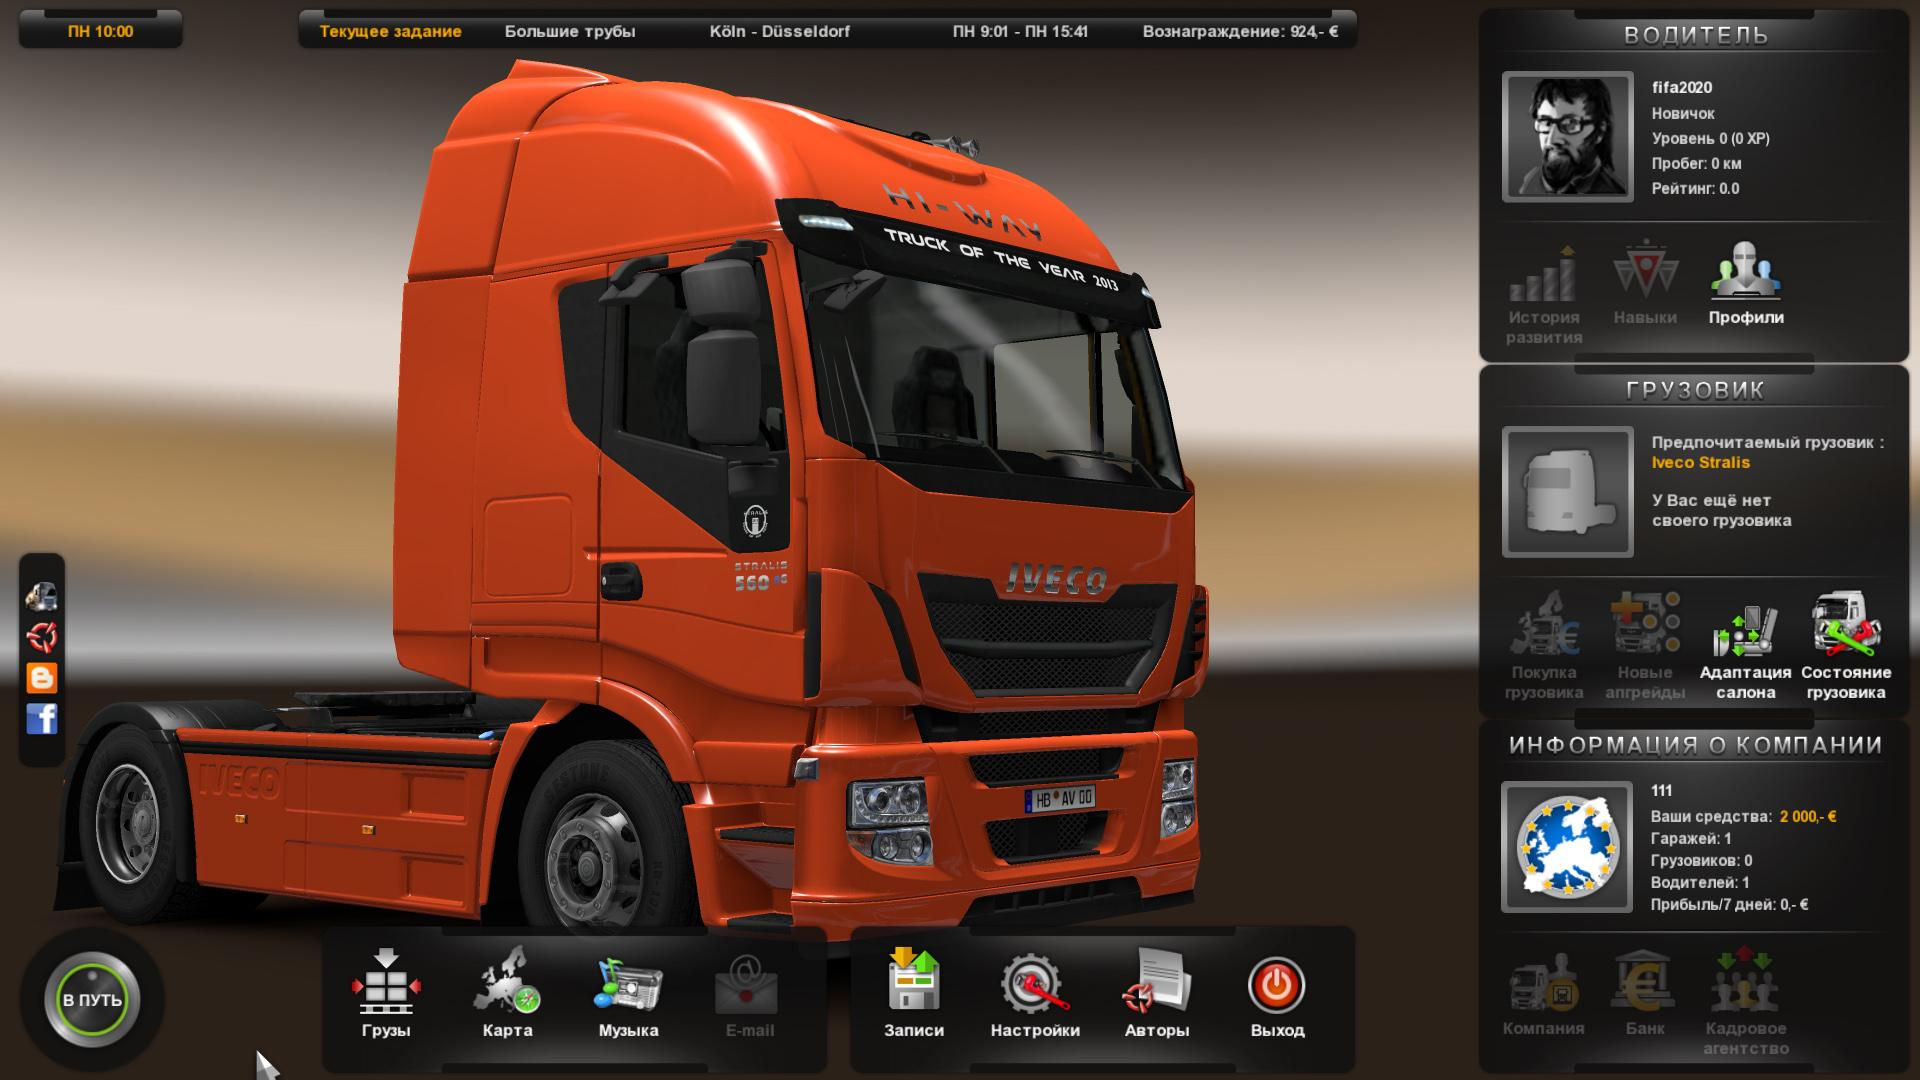 euro truck simulator patch 1.6 download